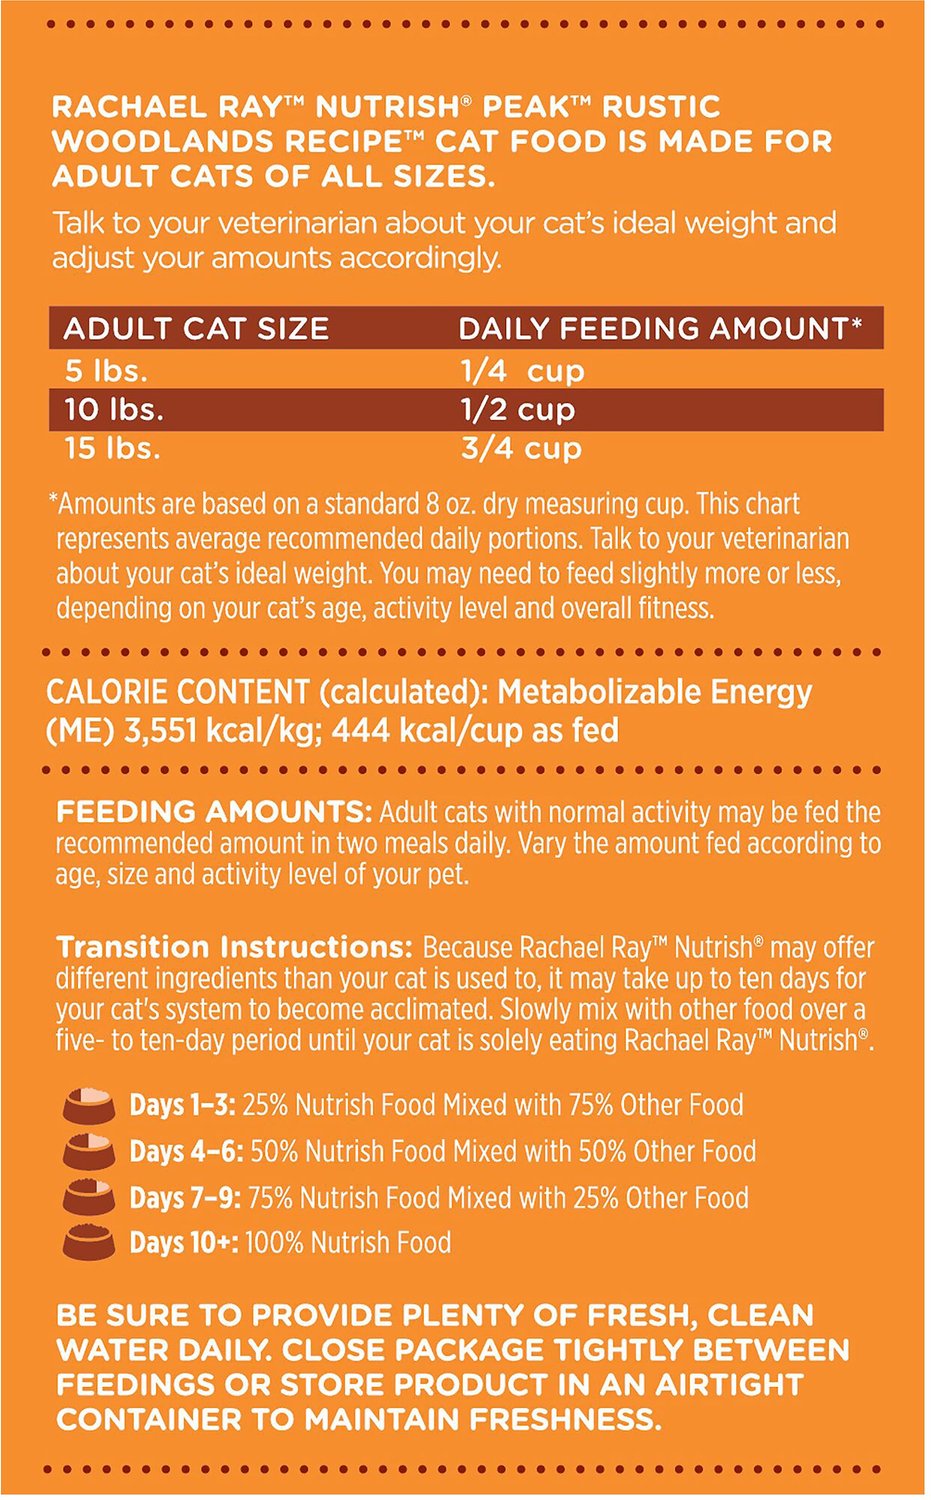 Dry Cat Food Calorie Chart